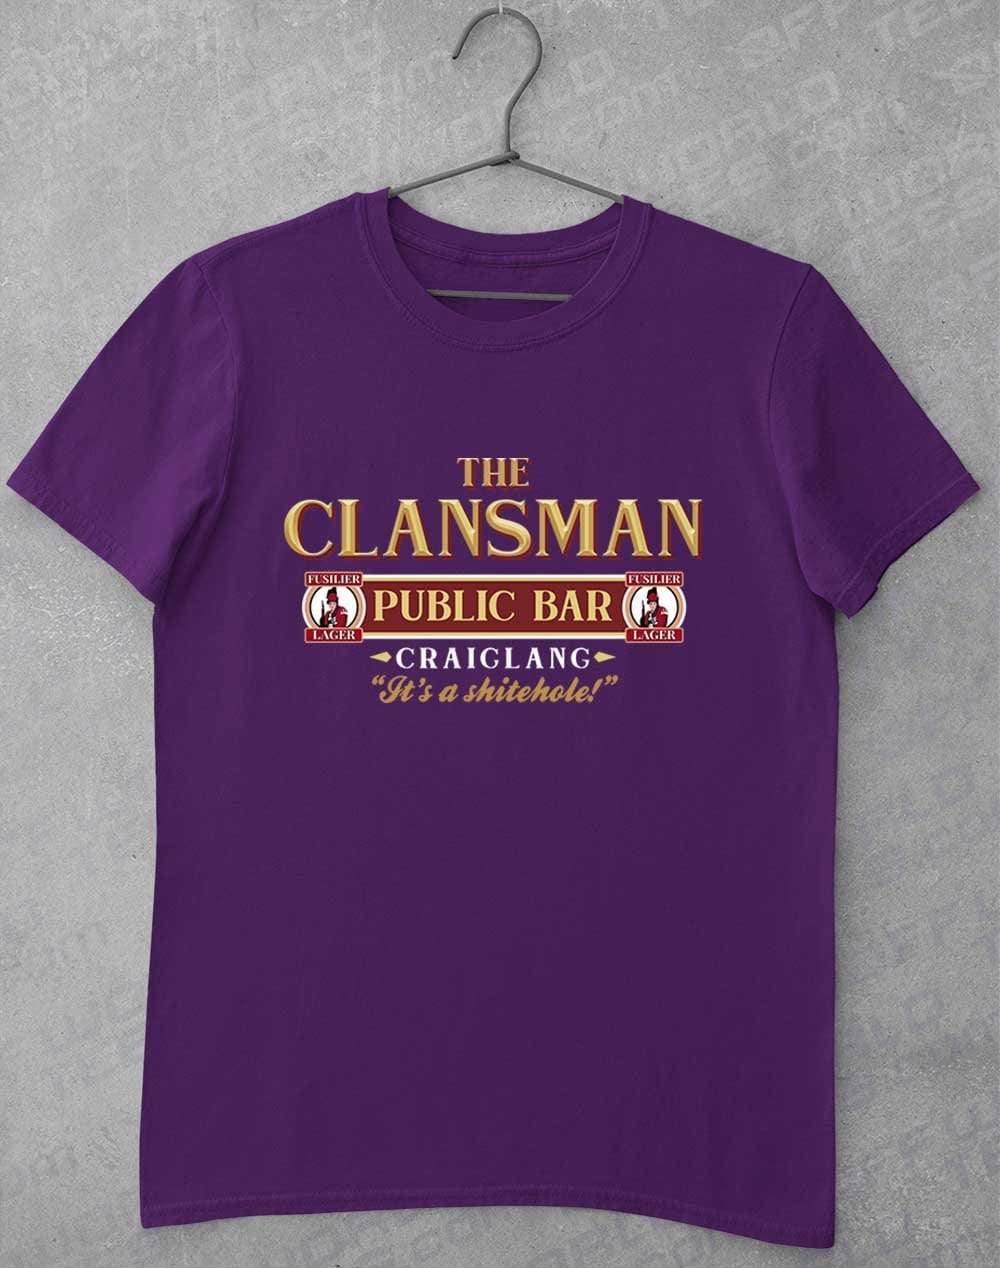 The Clansman Craiglang T-Shirt S / Purple  - Off World Tees